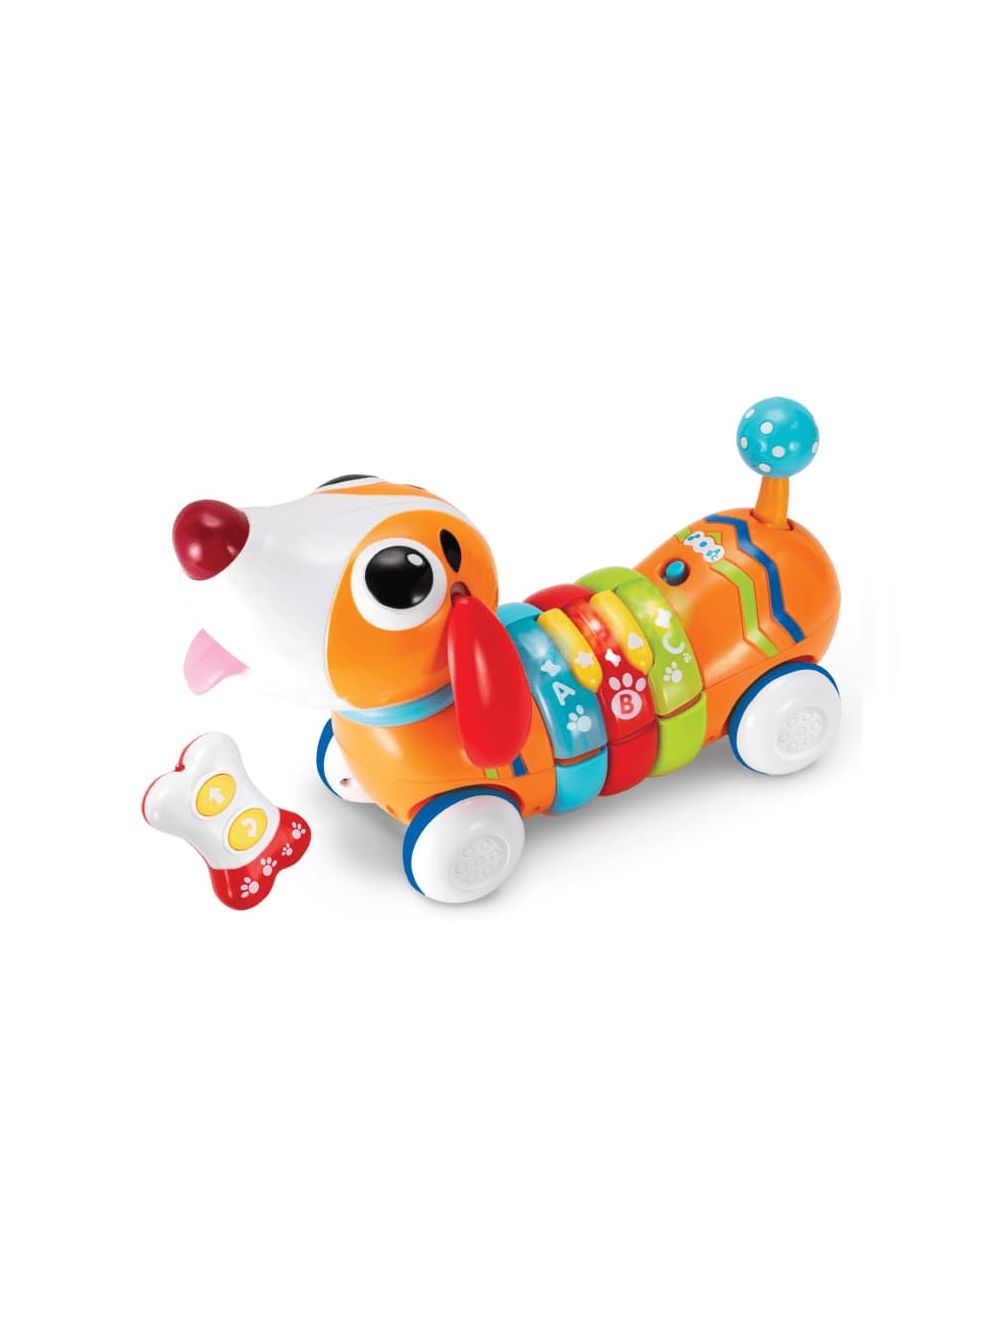 Winfun R/C Rainbow Puppy Musical Toy